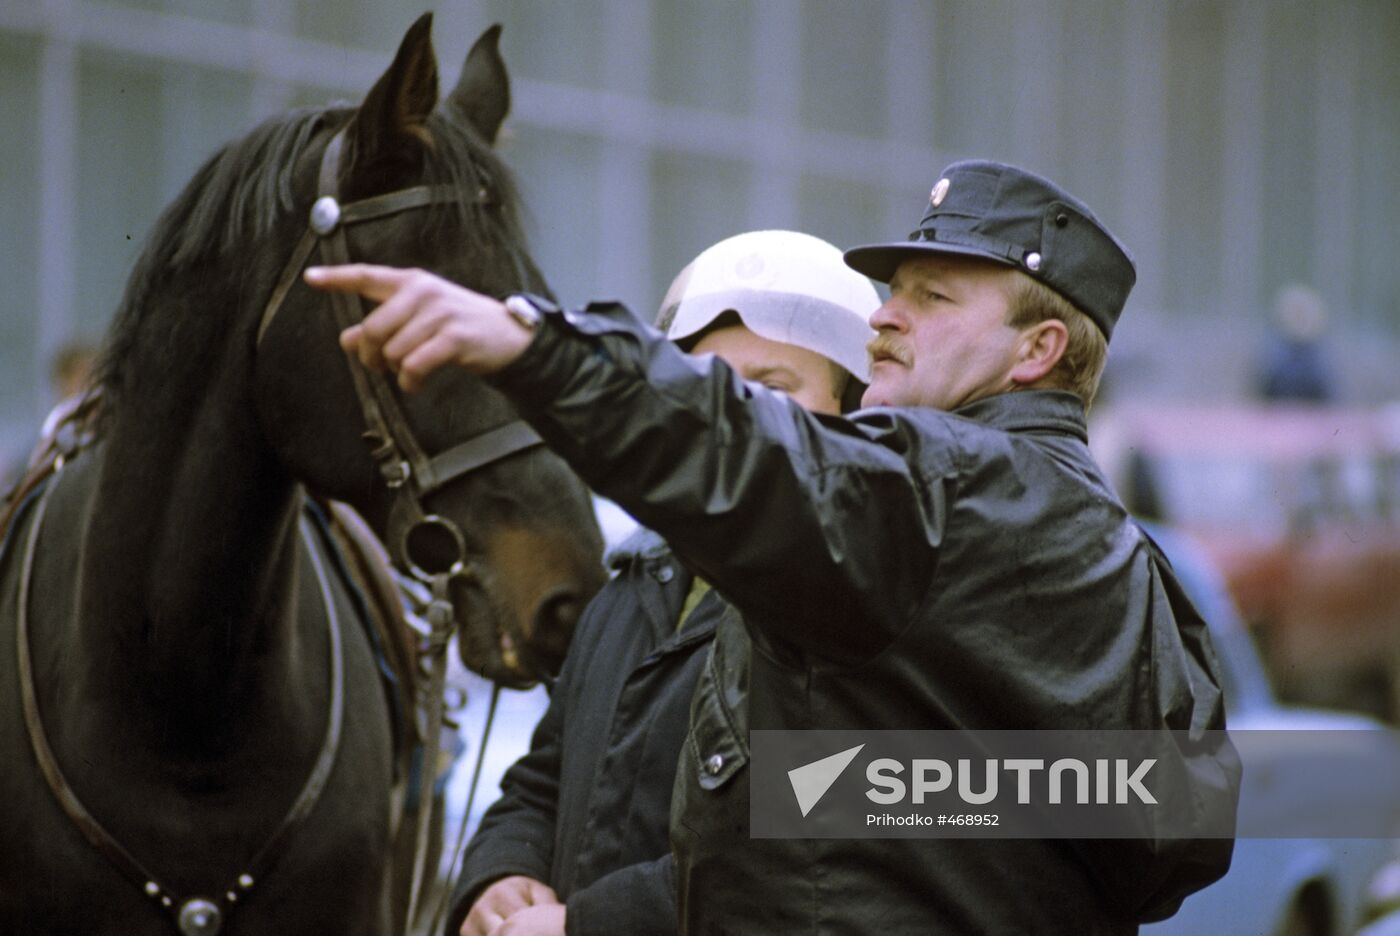 Horse police patrol